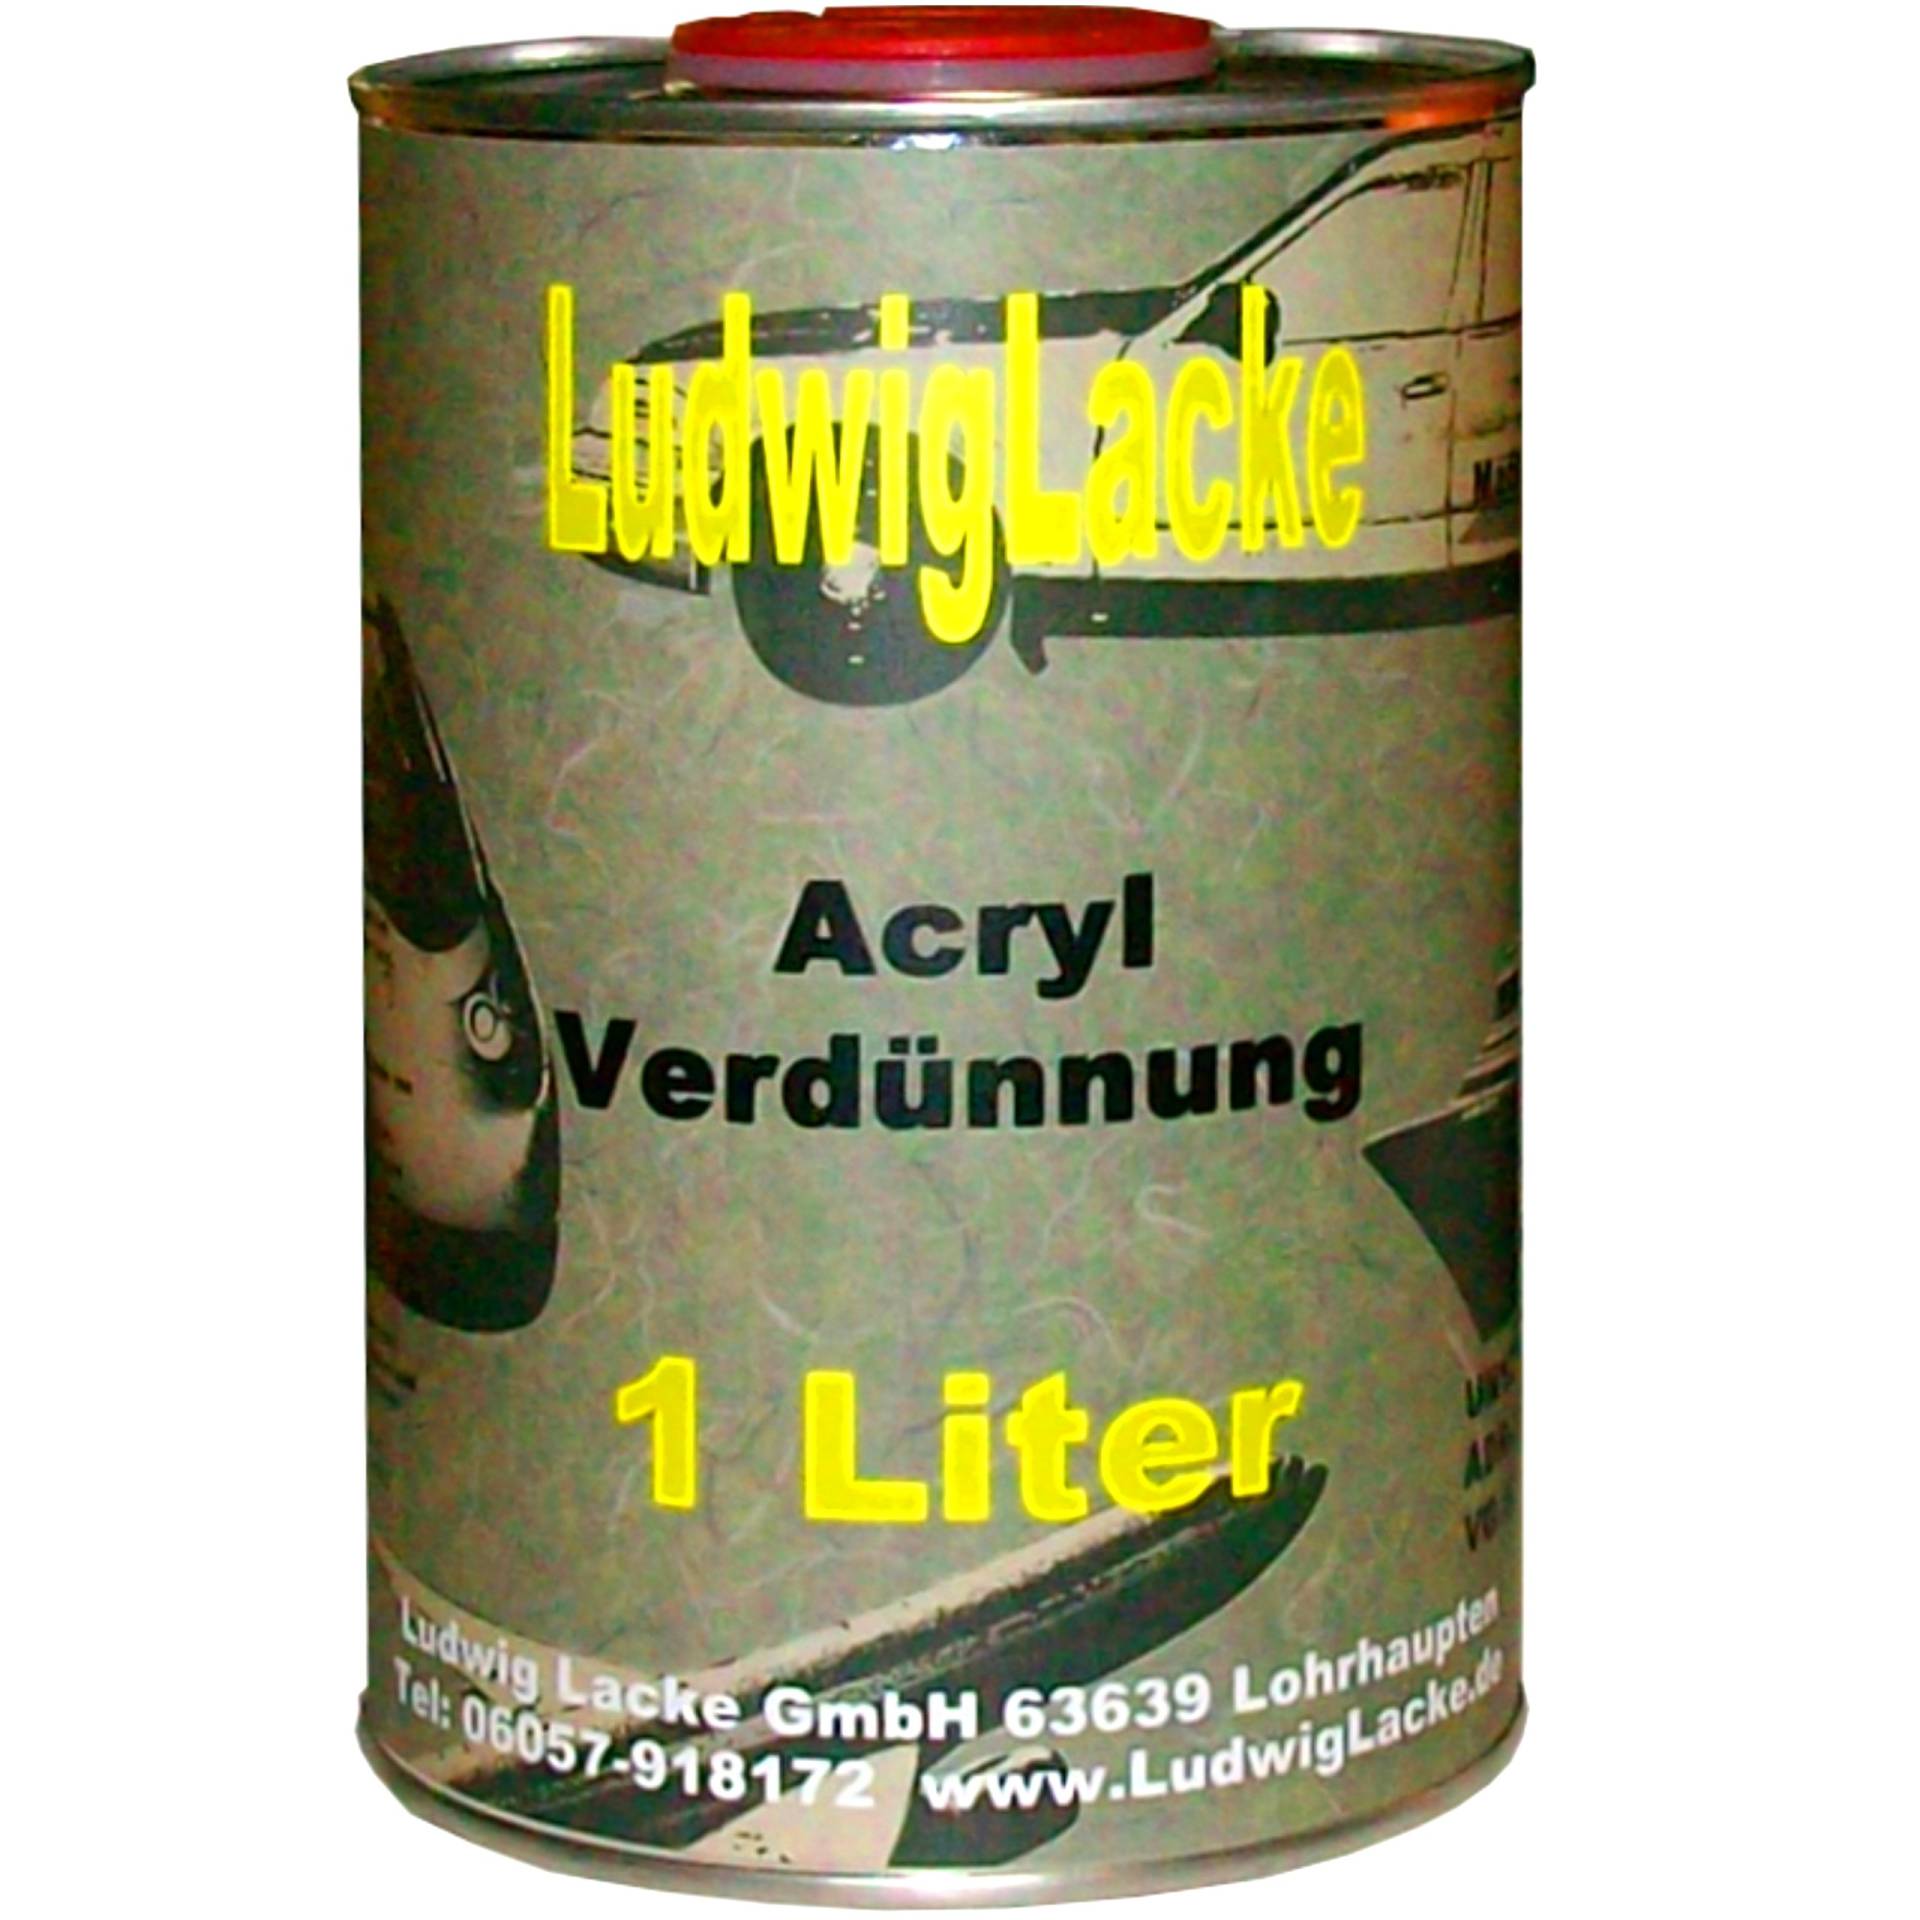 Ludwiglacke 1L Acryl Verdünner normal von Ludwiglacke